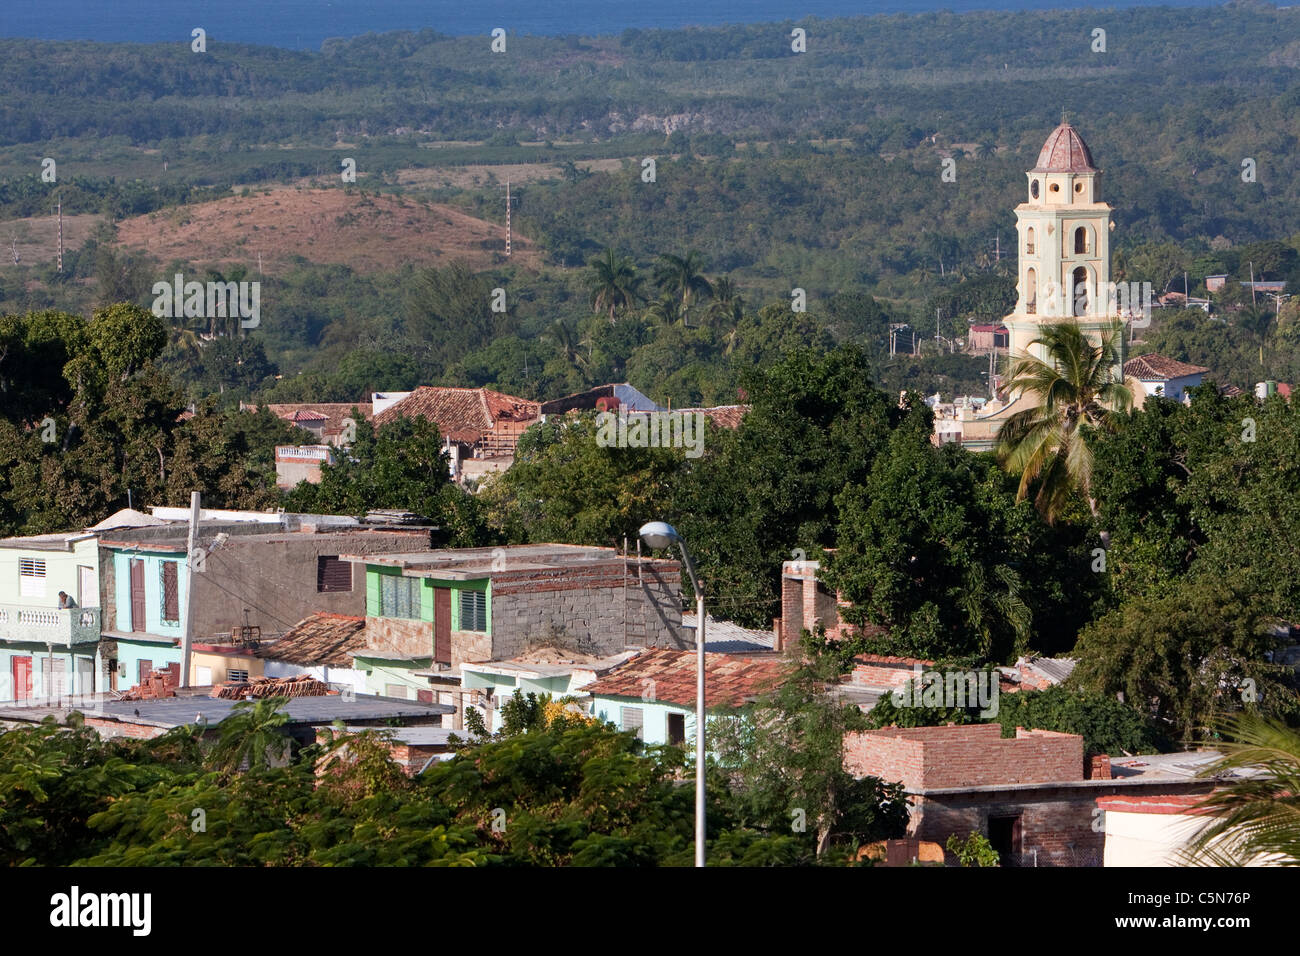 Cuba Trinidad. Vista dalla collina. Torre Campanaria del monastero di San Francisco sulla destra. Caraibi in distanza. Foto Stock